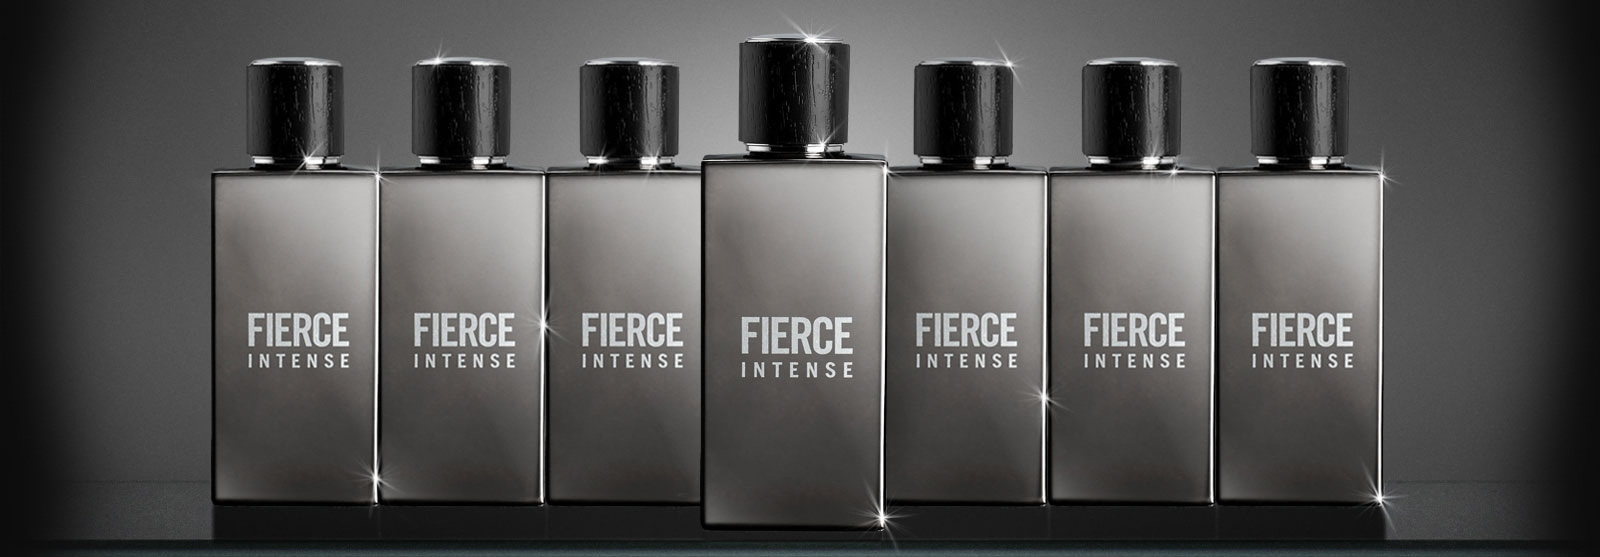 fierce abercrombie parfum